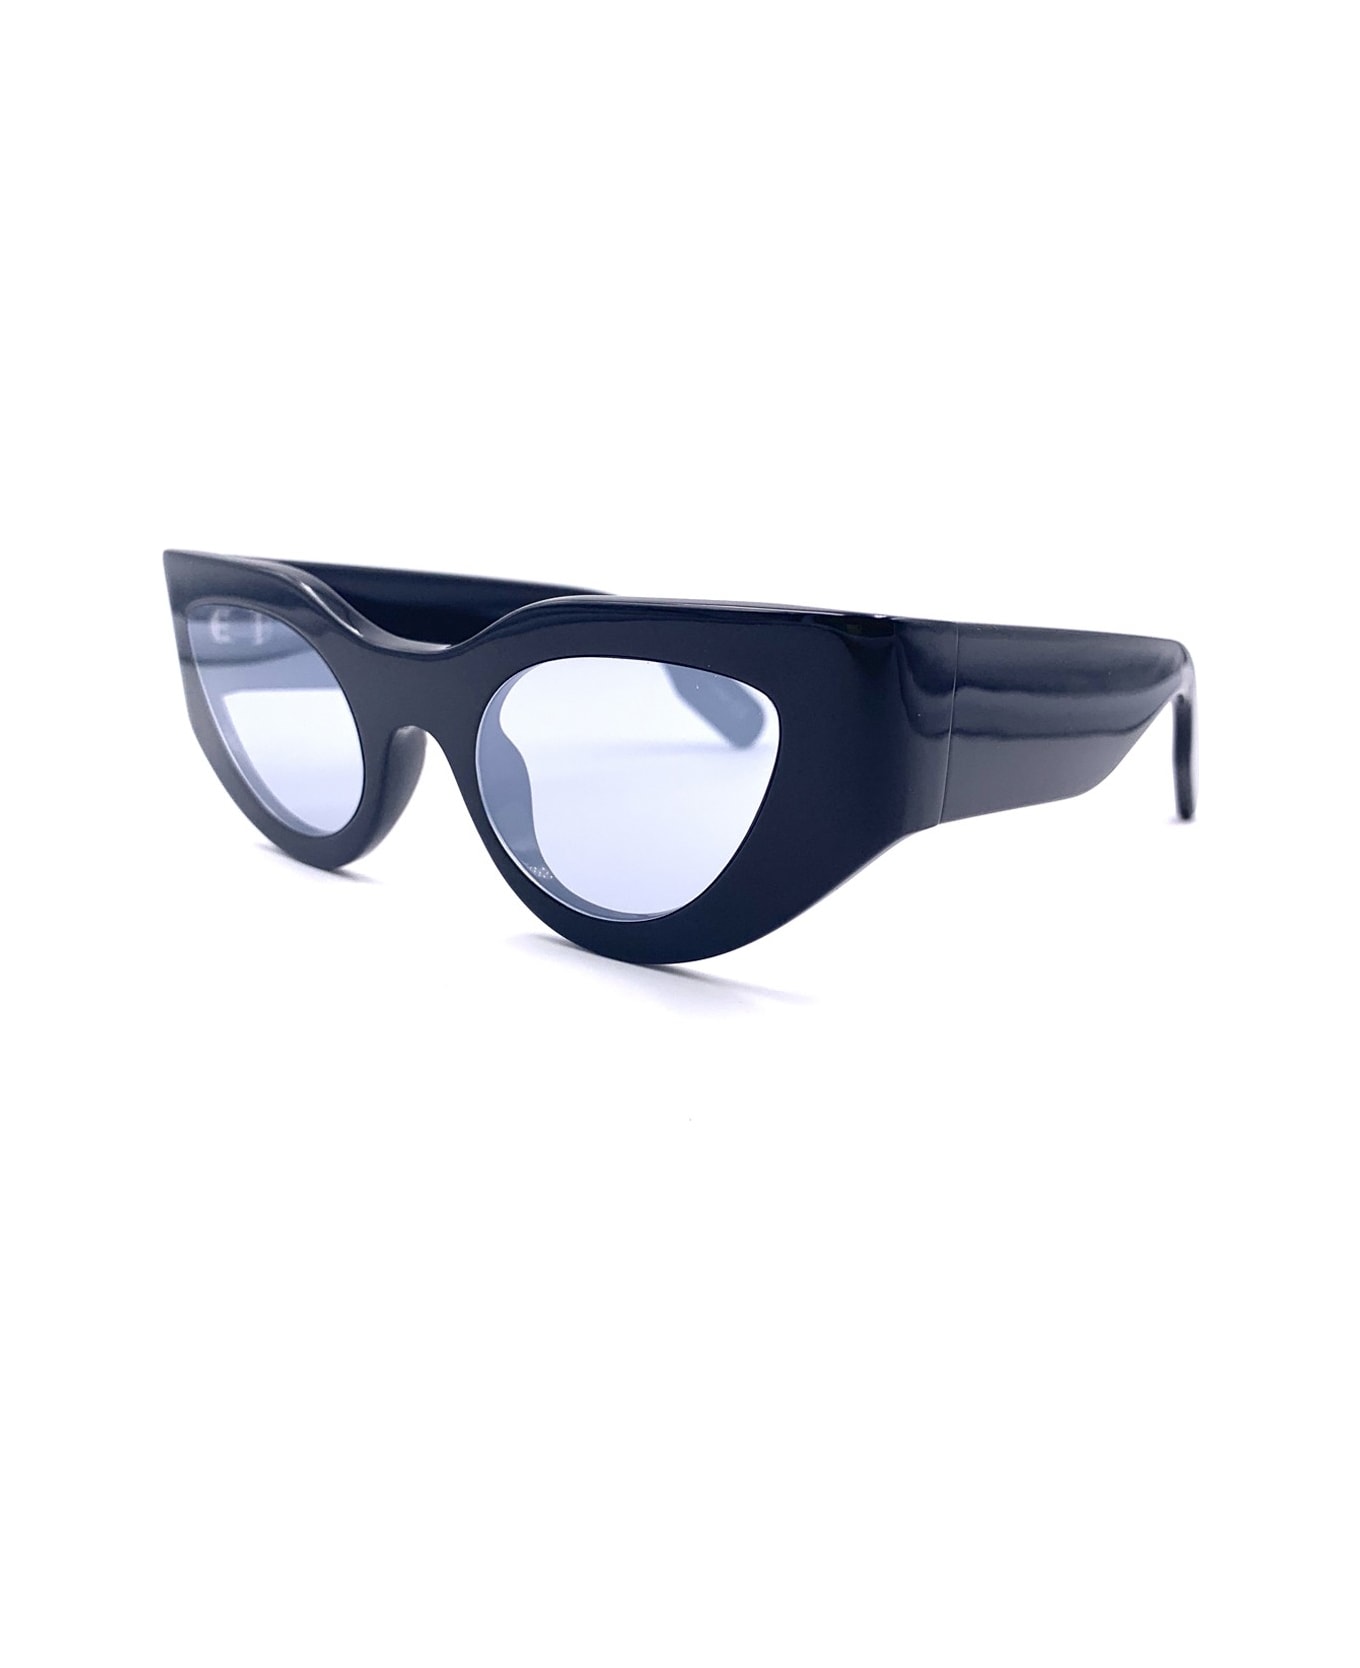 Kenzo Kz40067i Sunglasses - Nero サングラス